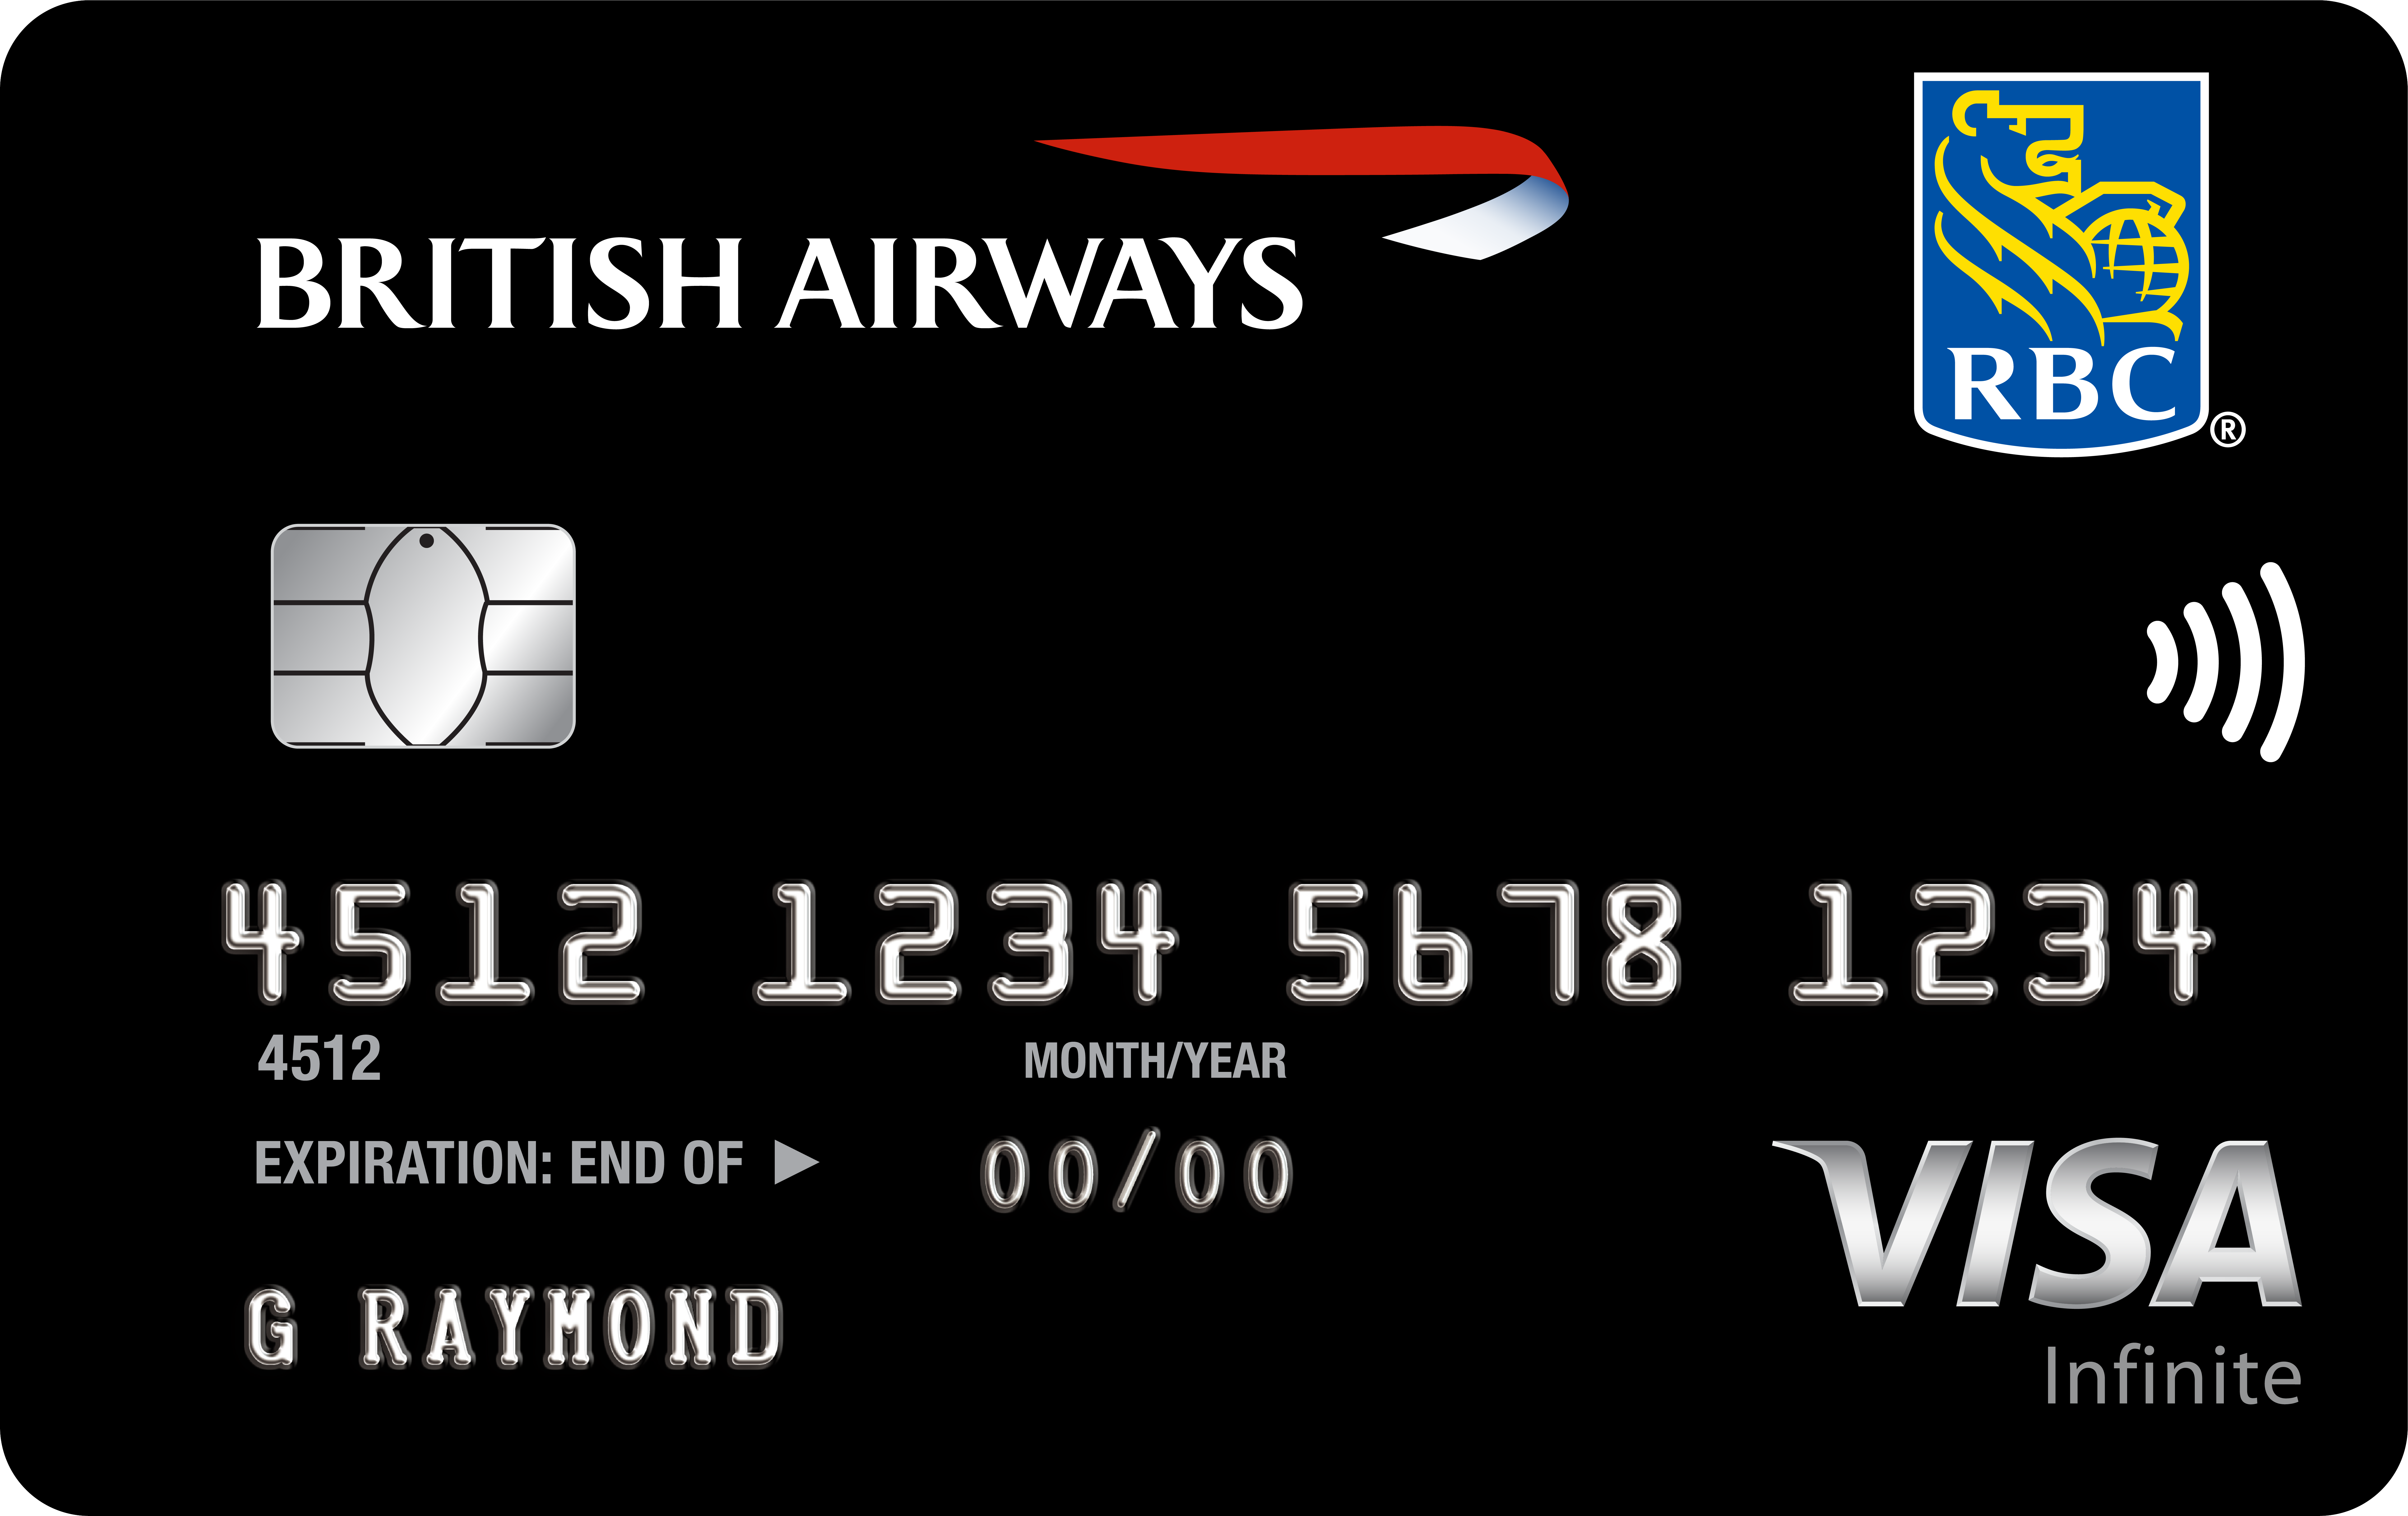 RBC British Airways Visa Infinite 